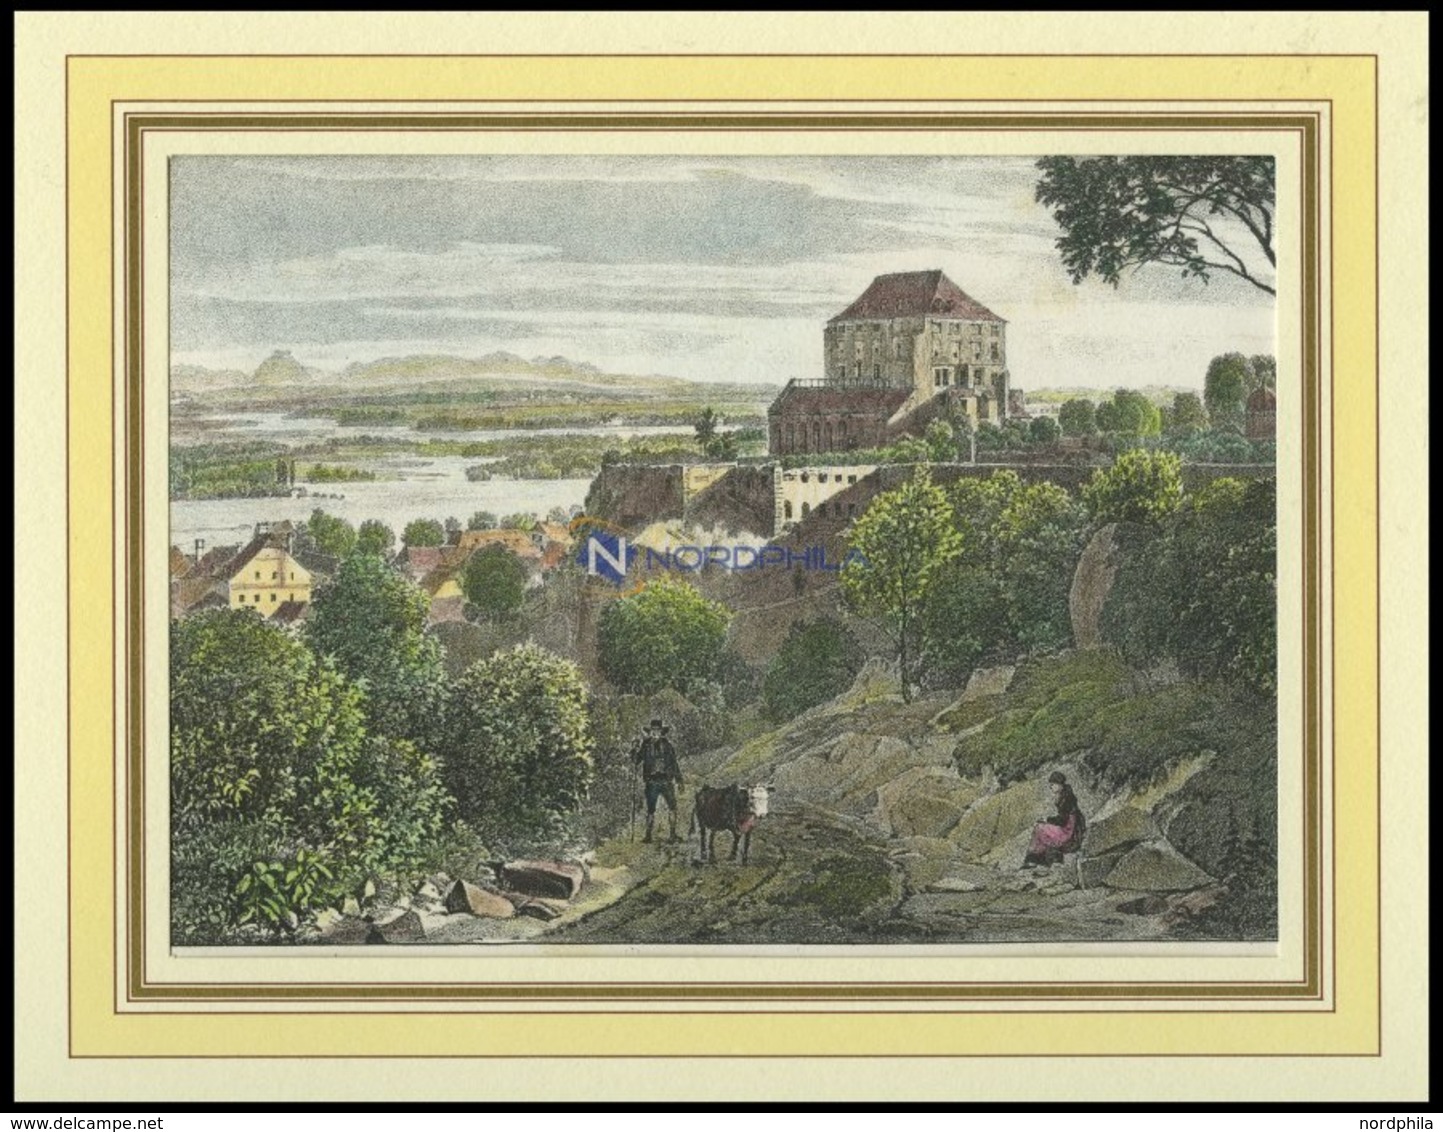 STEYEREGG, Gesamtansicht, Kolorierter Holzstich Um 1880 - Lithographien